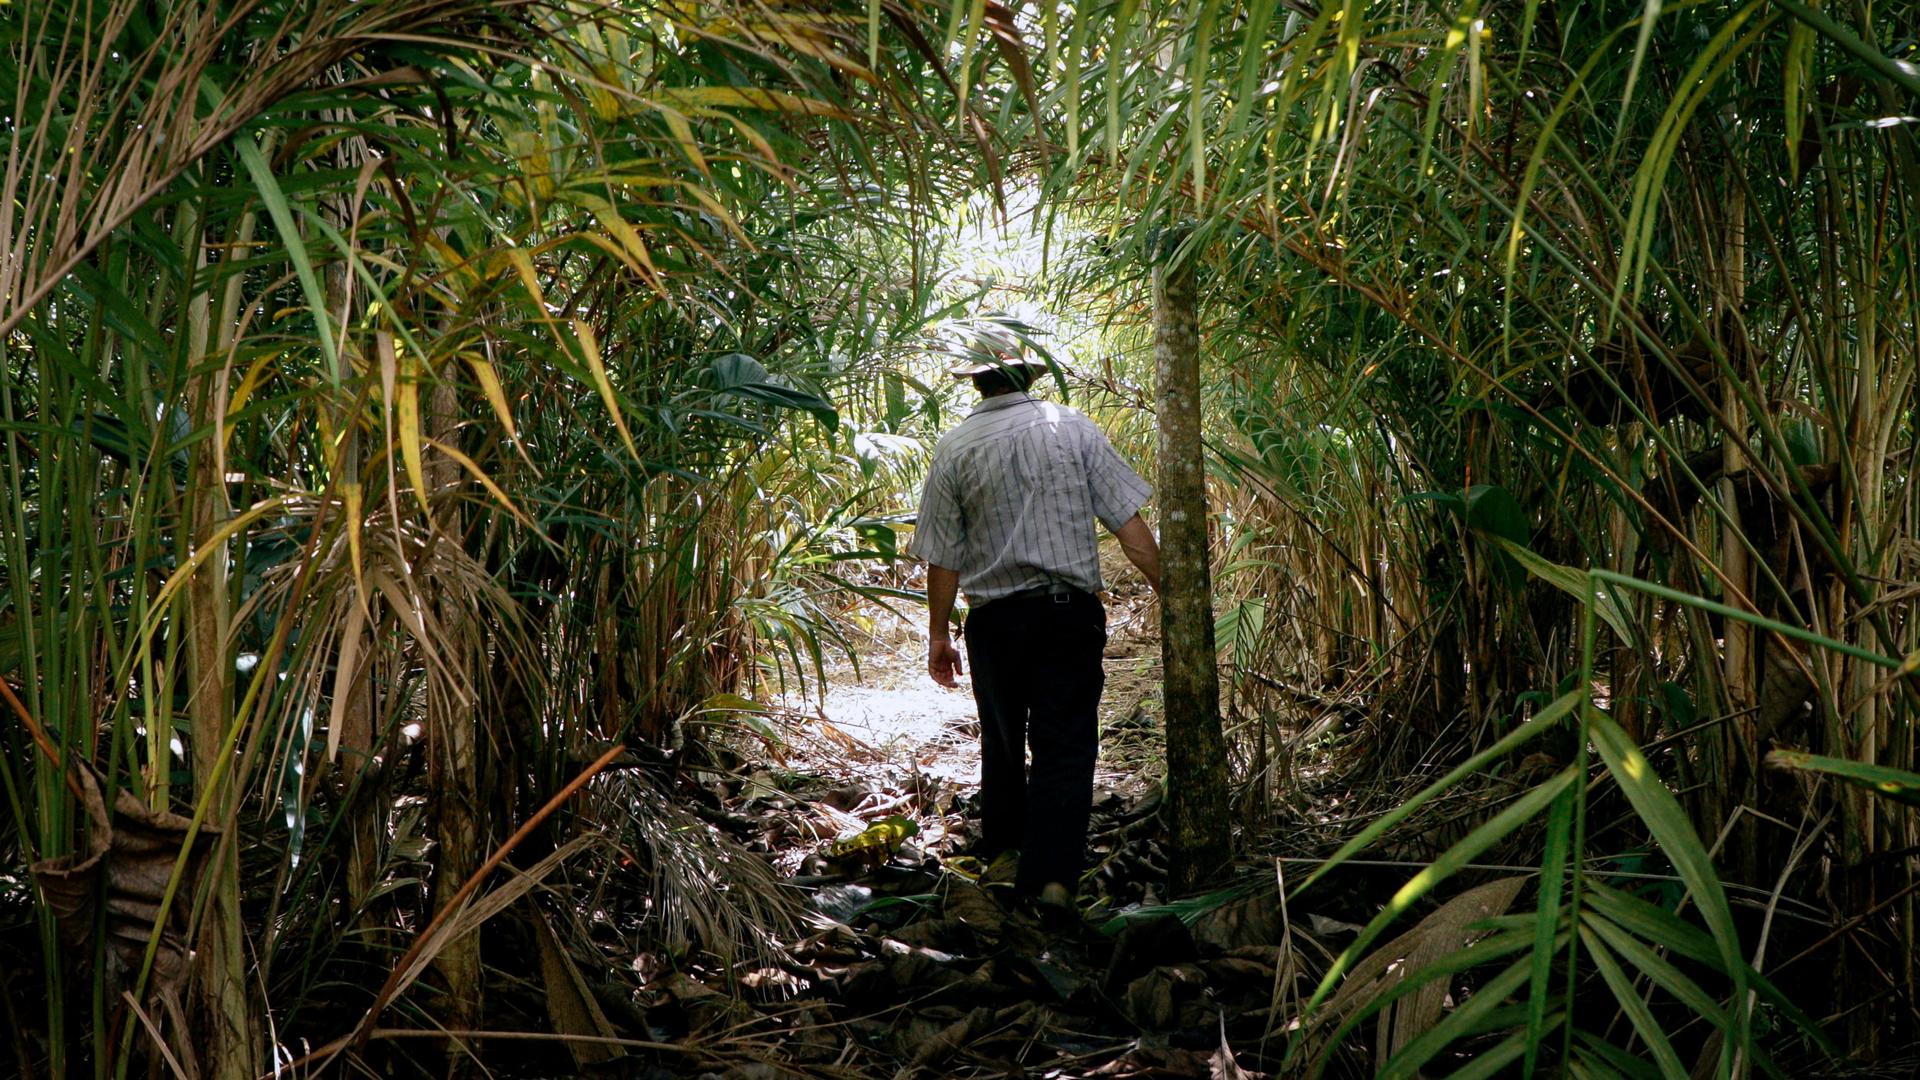 A man walks through a dense, leafy area.